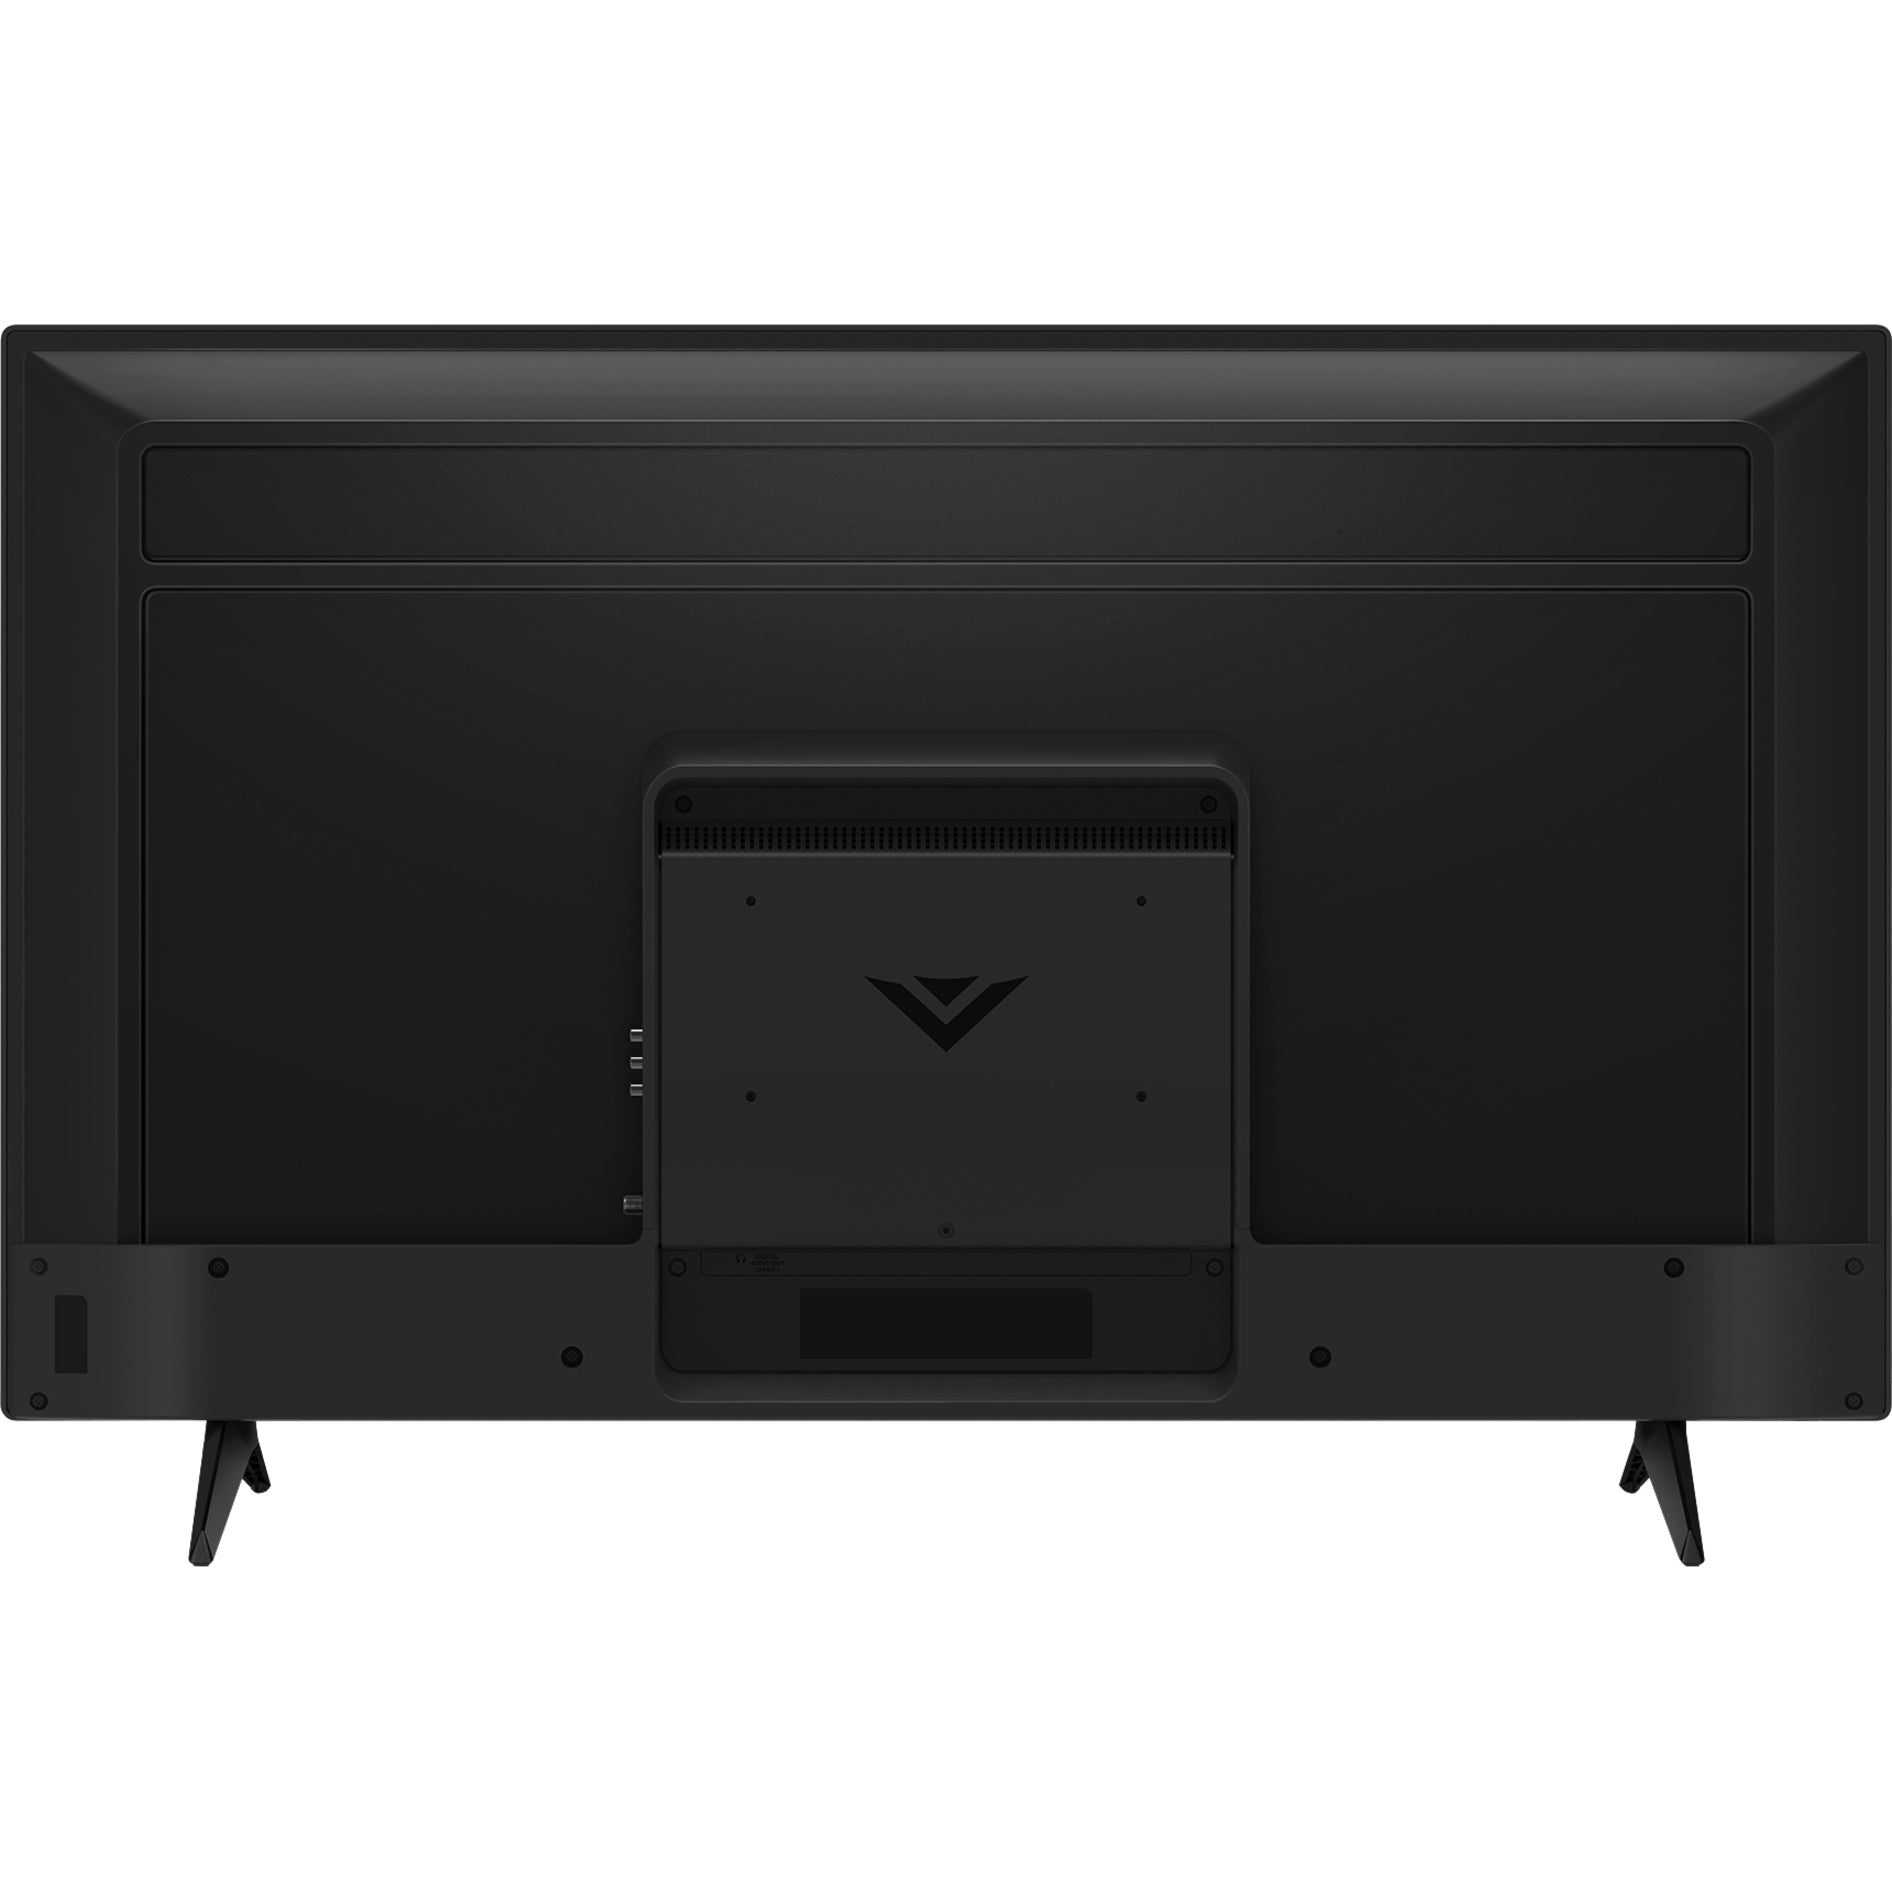 VIZIO 32" Class D-Series FHD LED Smart TV D32f-J04 (D32F-J04) Rear image